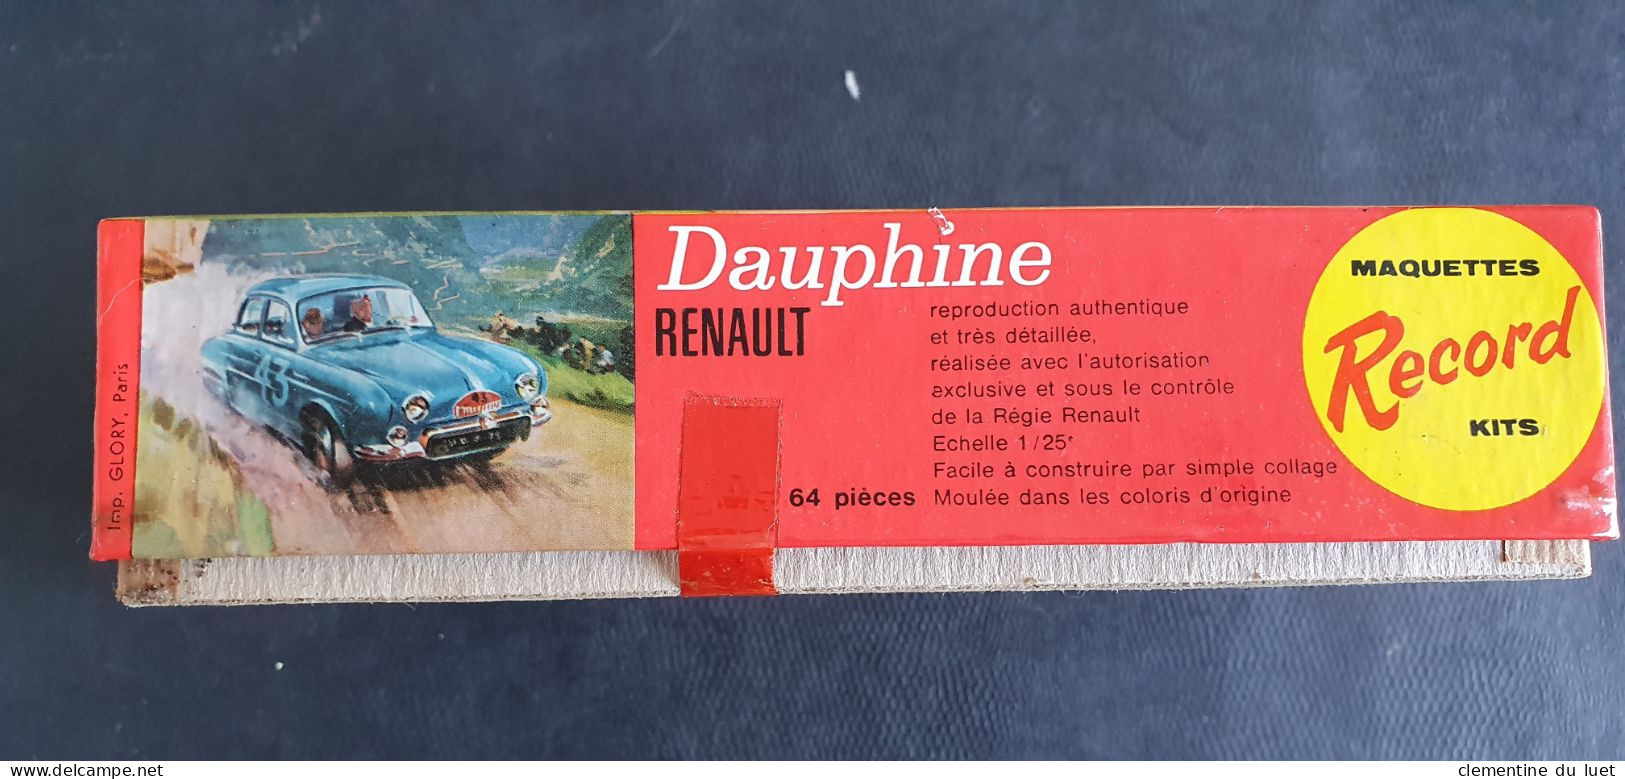 MAQUETTE RENAULT DAUPHINE RECORD KITS 64 PIECES ECHELLE 1 / 25 EME - Automobili